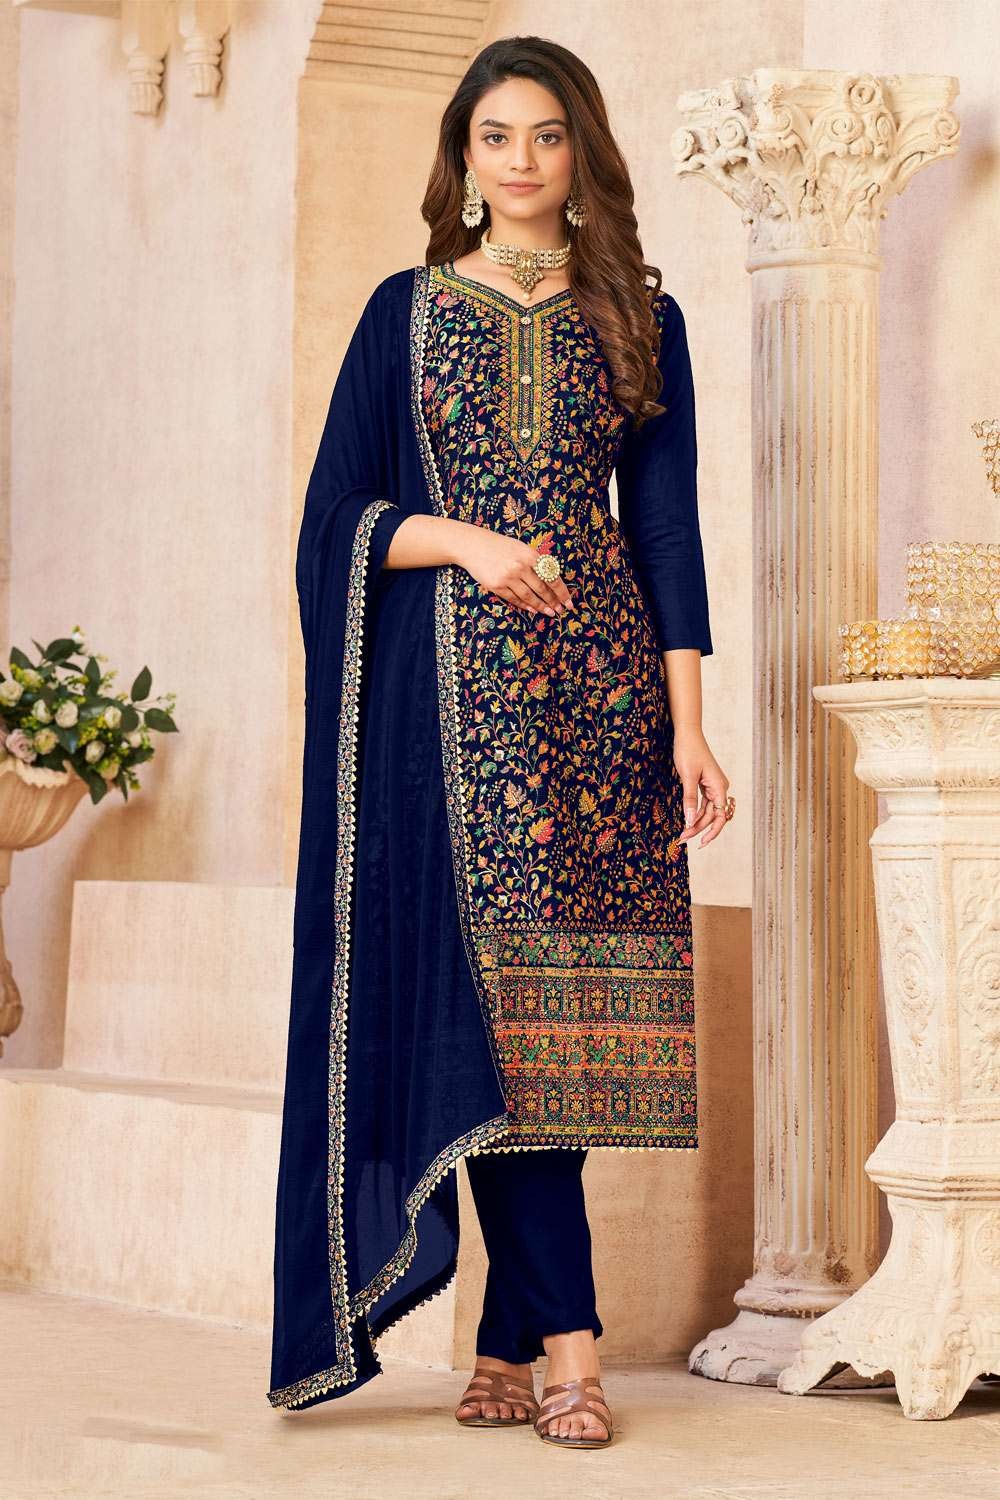 Pakistani Salwar Kameez Designer Suit Heavy Indian Wedding Party wine  Beautiful | eBay